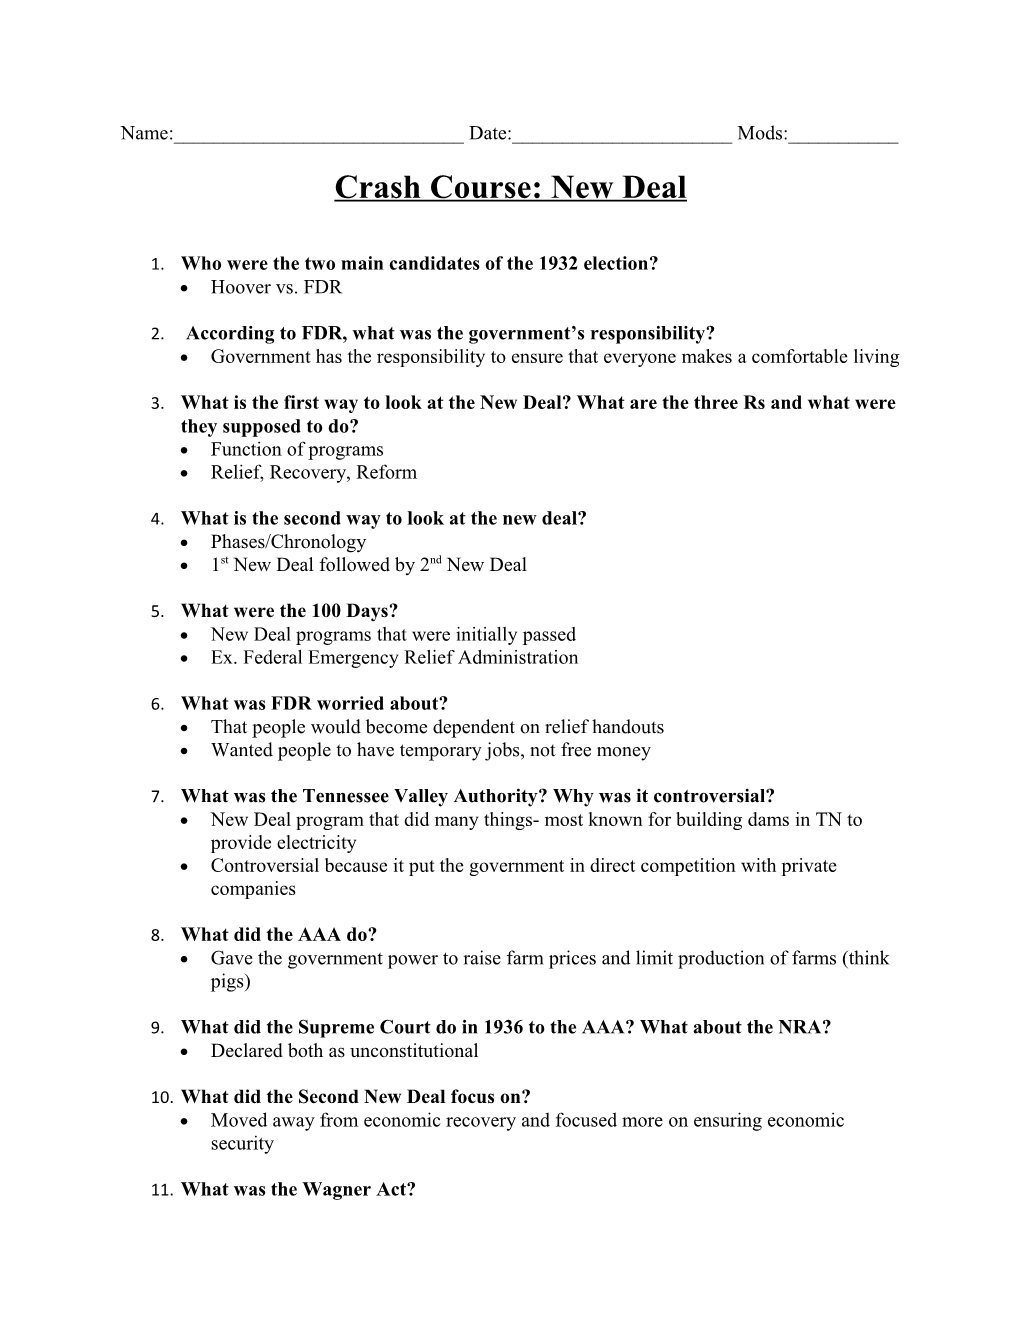 Crash Course: New Deal